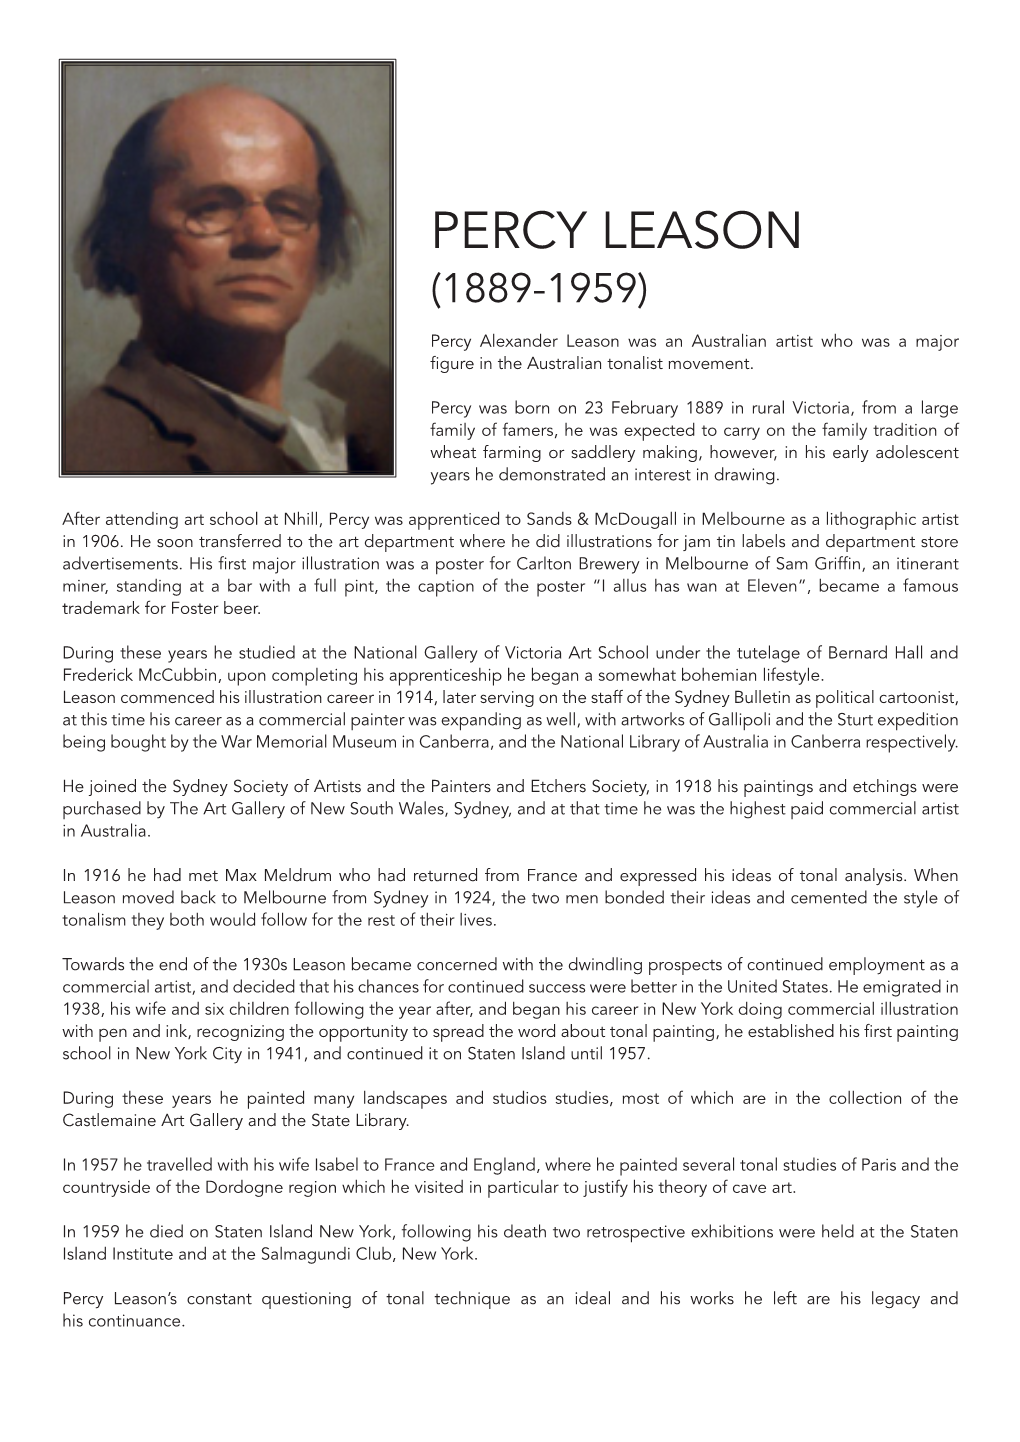 Percy Leason (1889-1959)